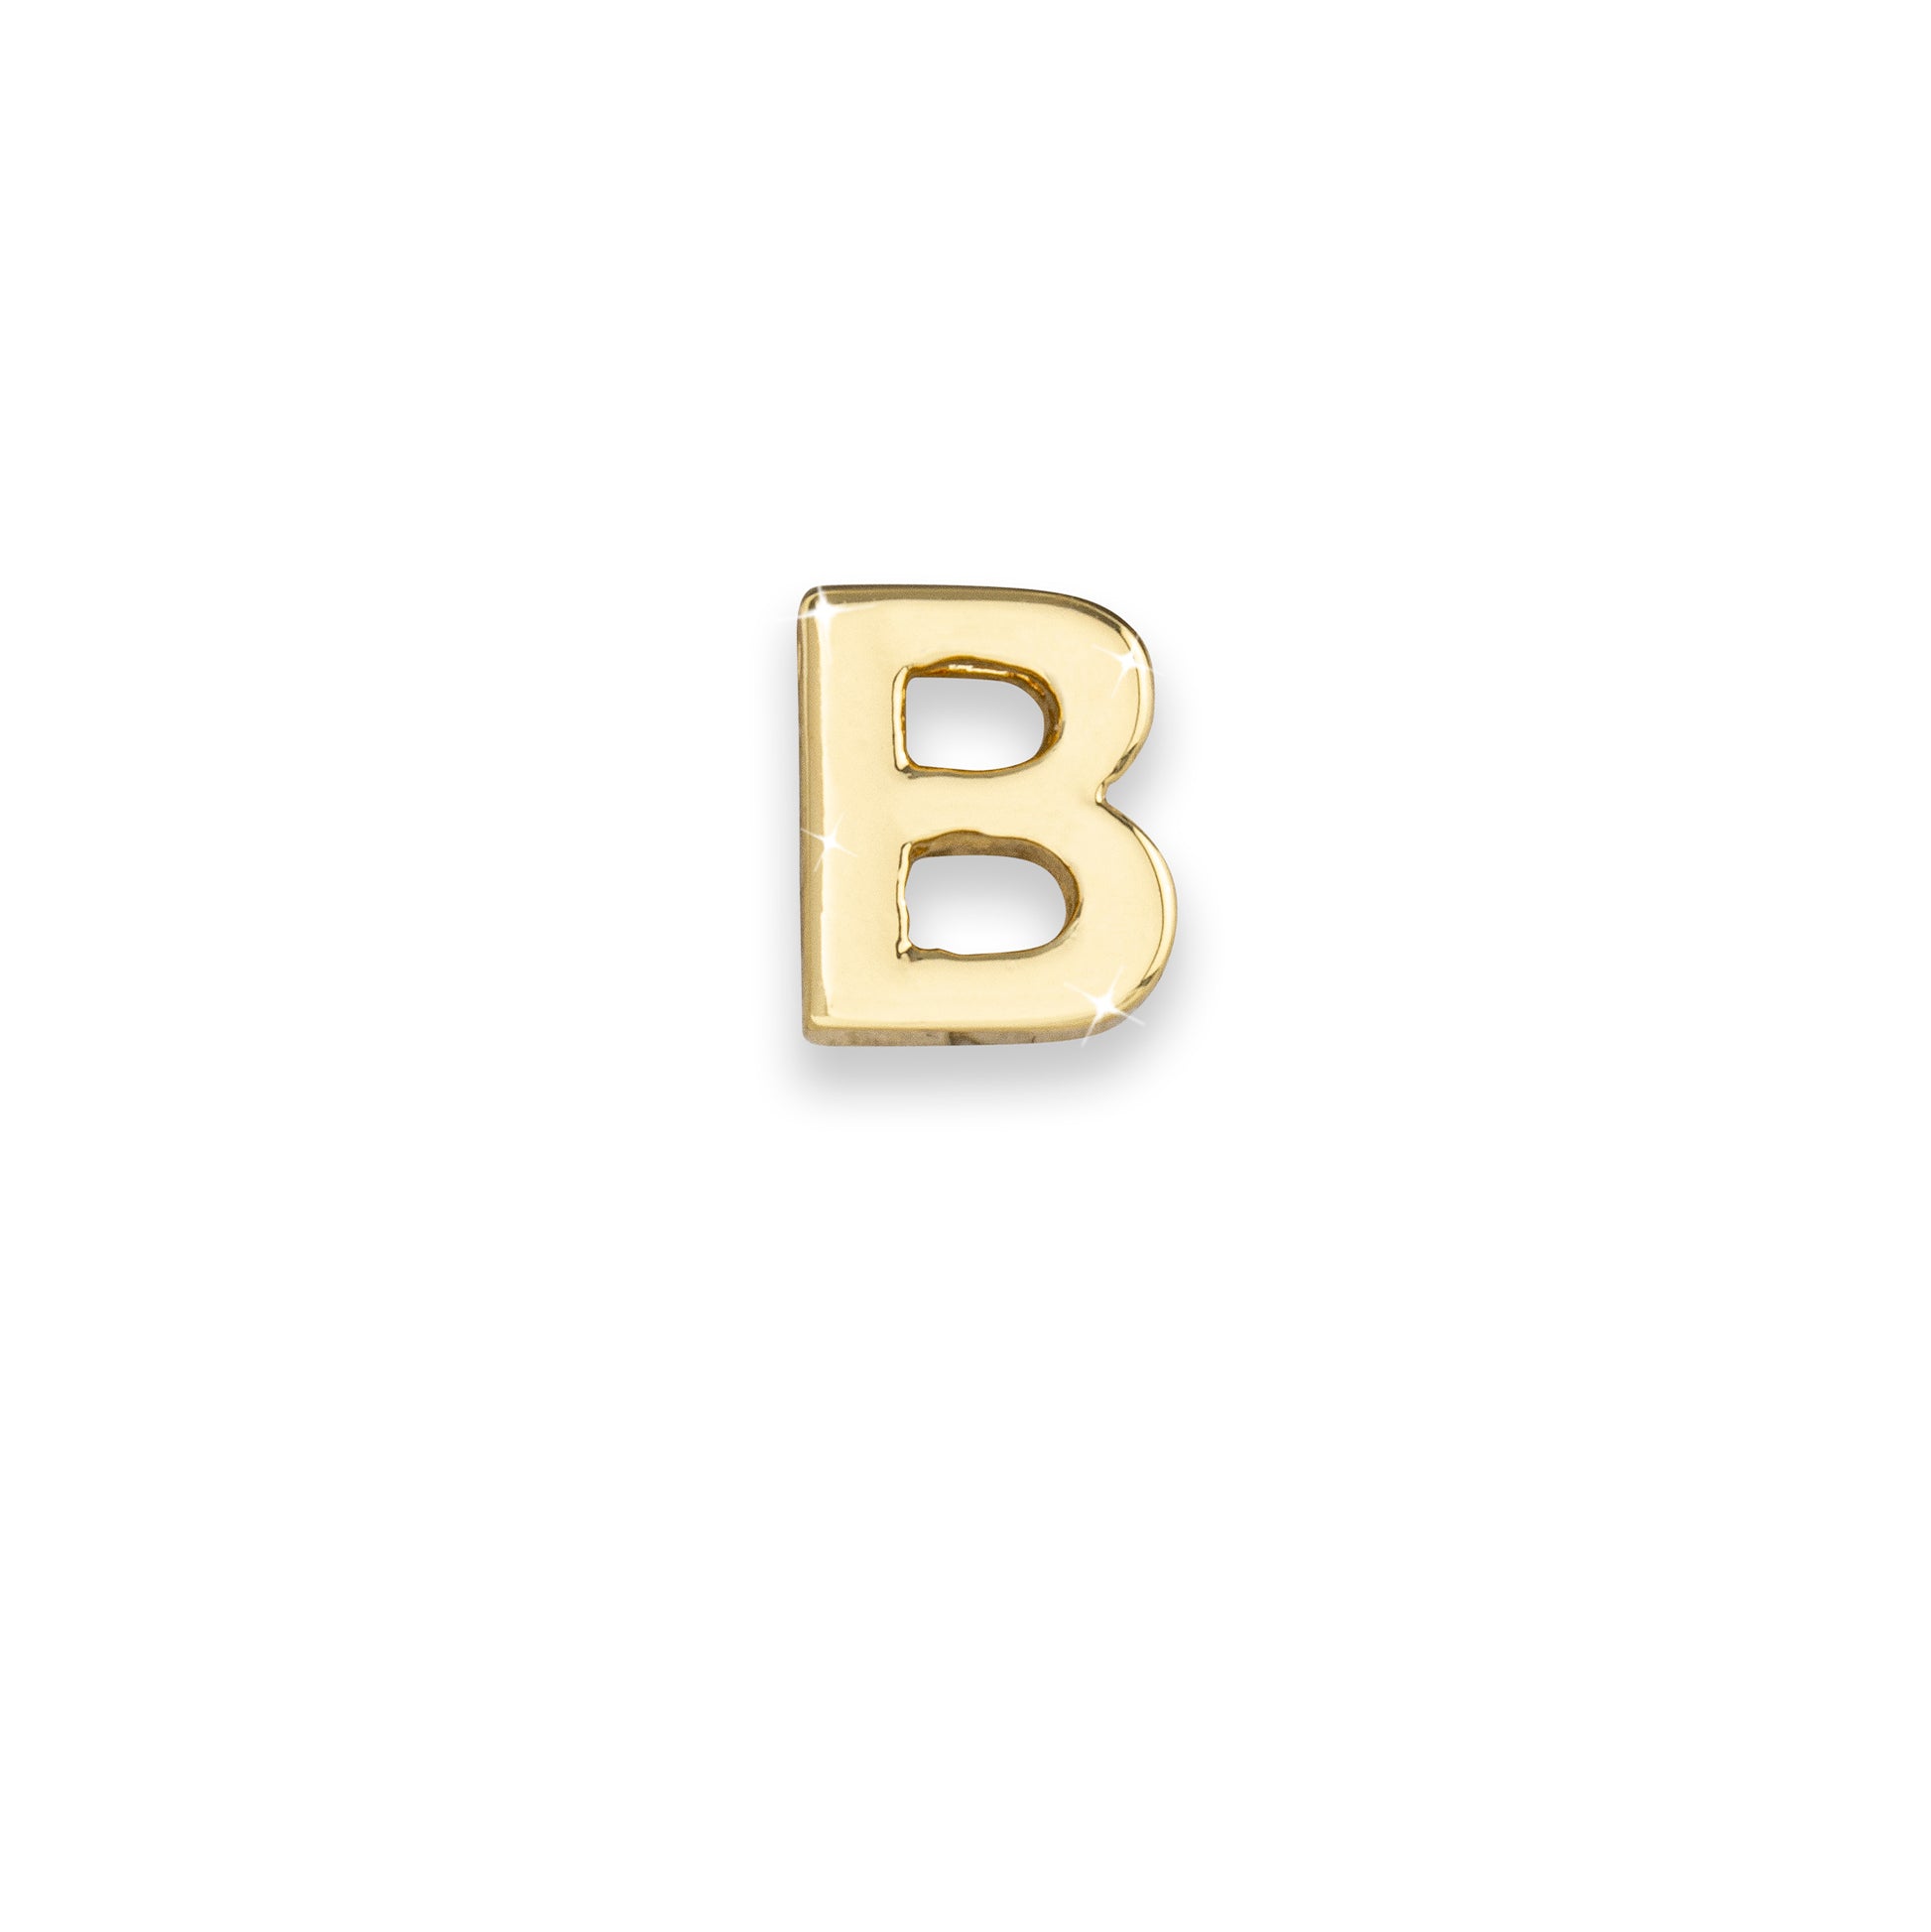 Gold letter B monogram charm for necklaces & bracelets